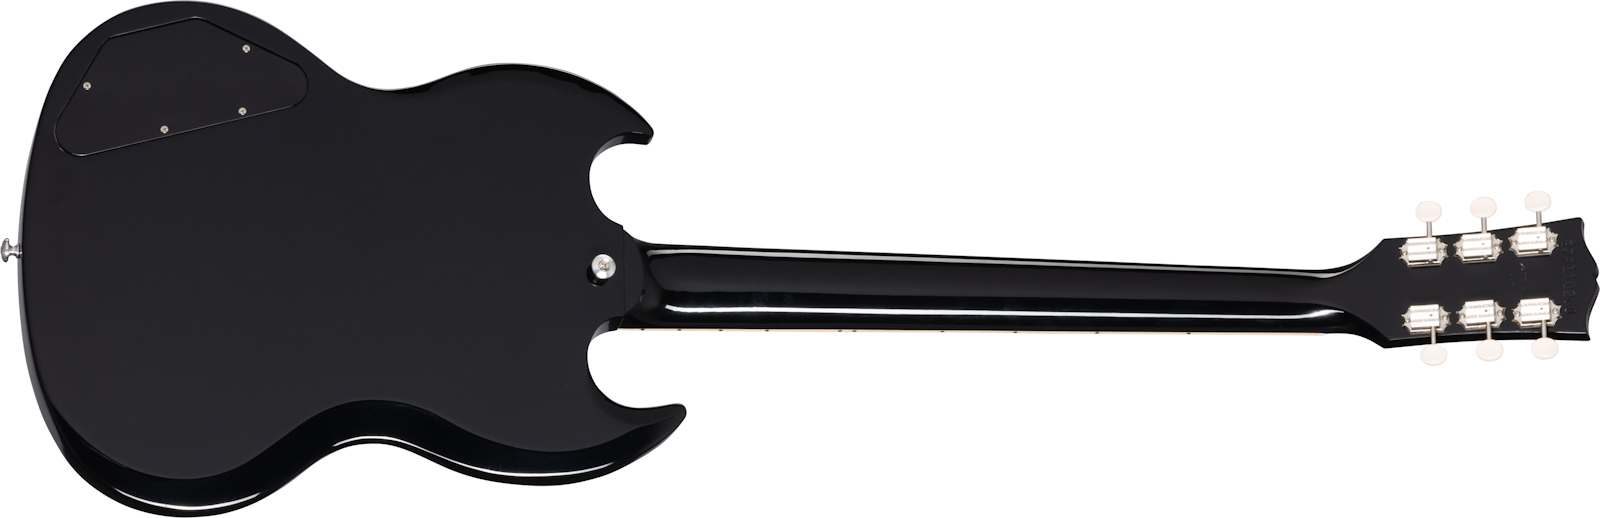 Gibson Sg Special Original 2021 2p90 Ht Rw - Ebony - Double Cut E-Gitarre - Variation 1